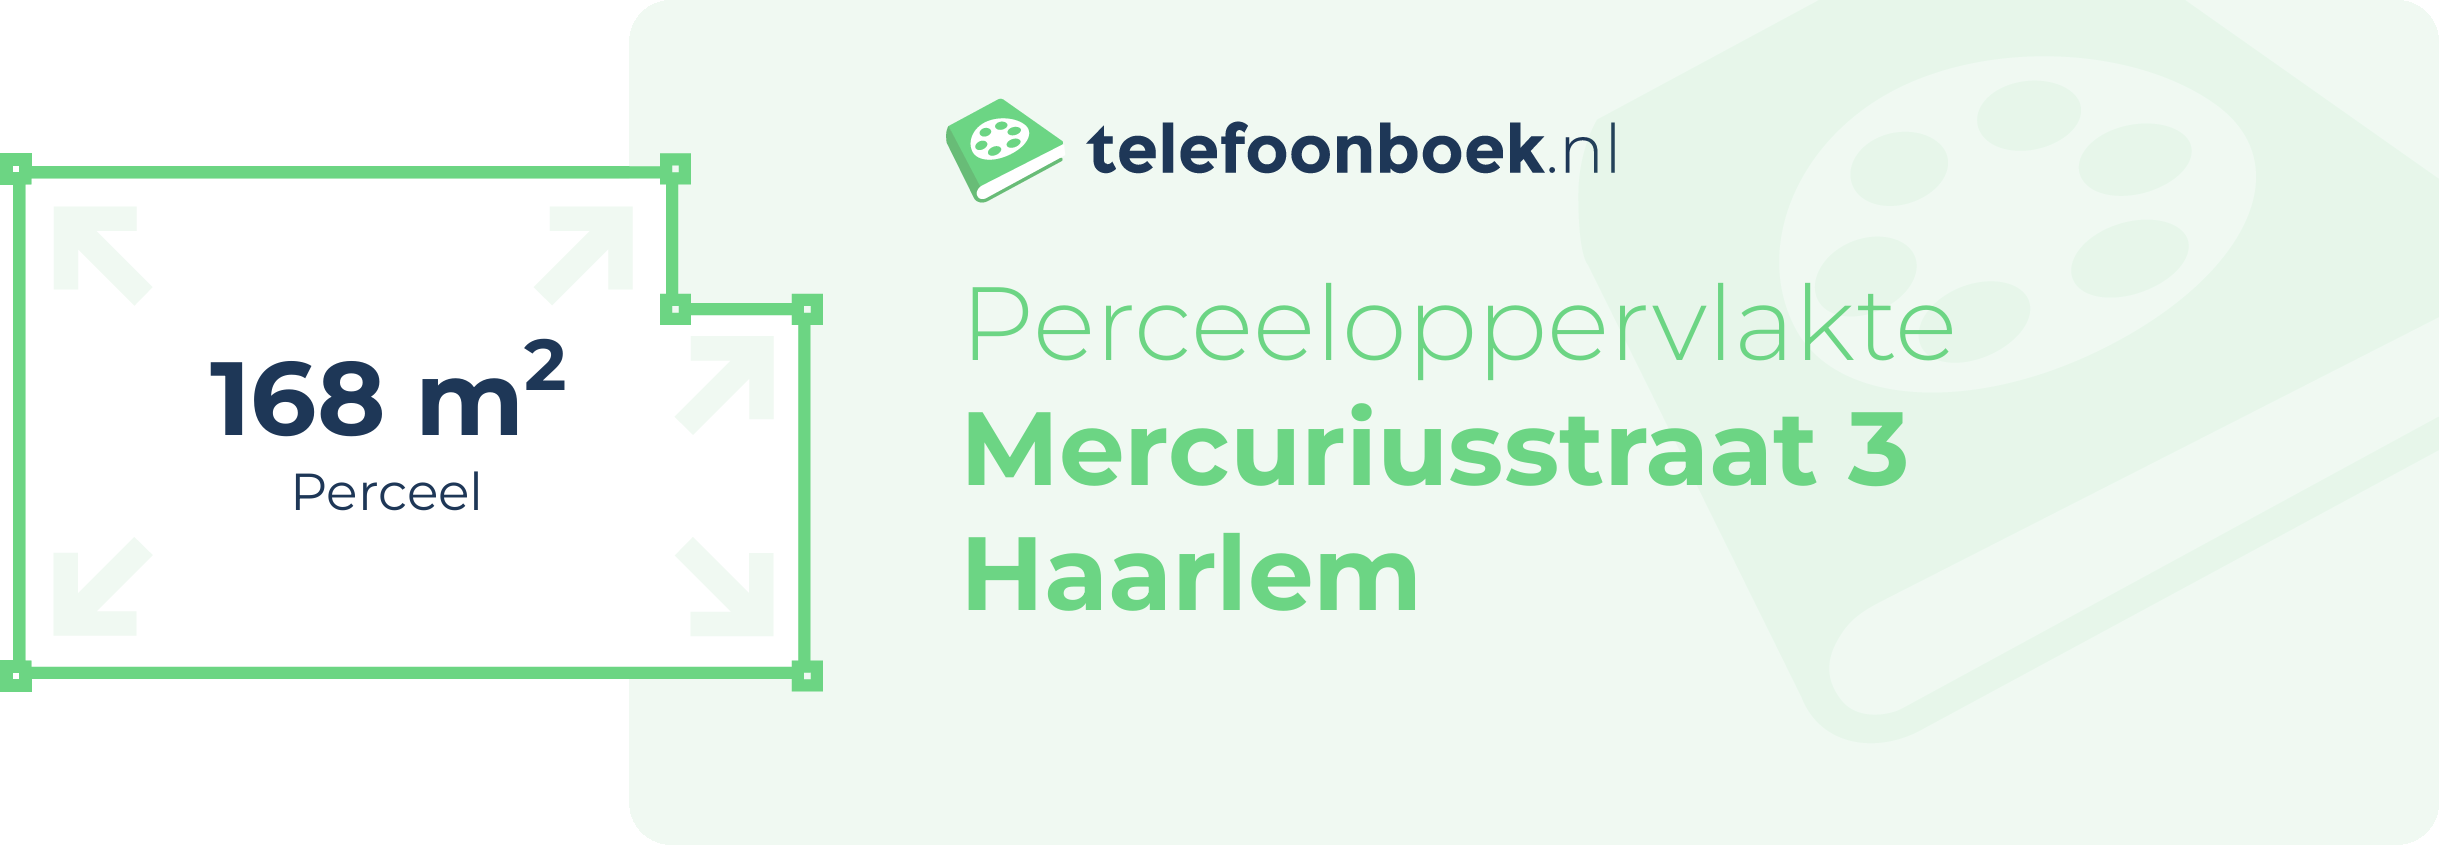 Perceeloppervlakte Mercuriusstraat 3 Haarlem